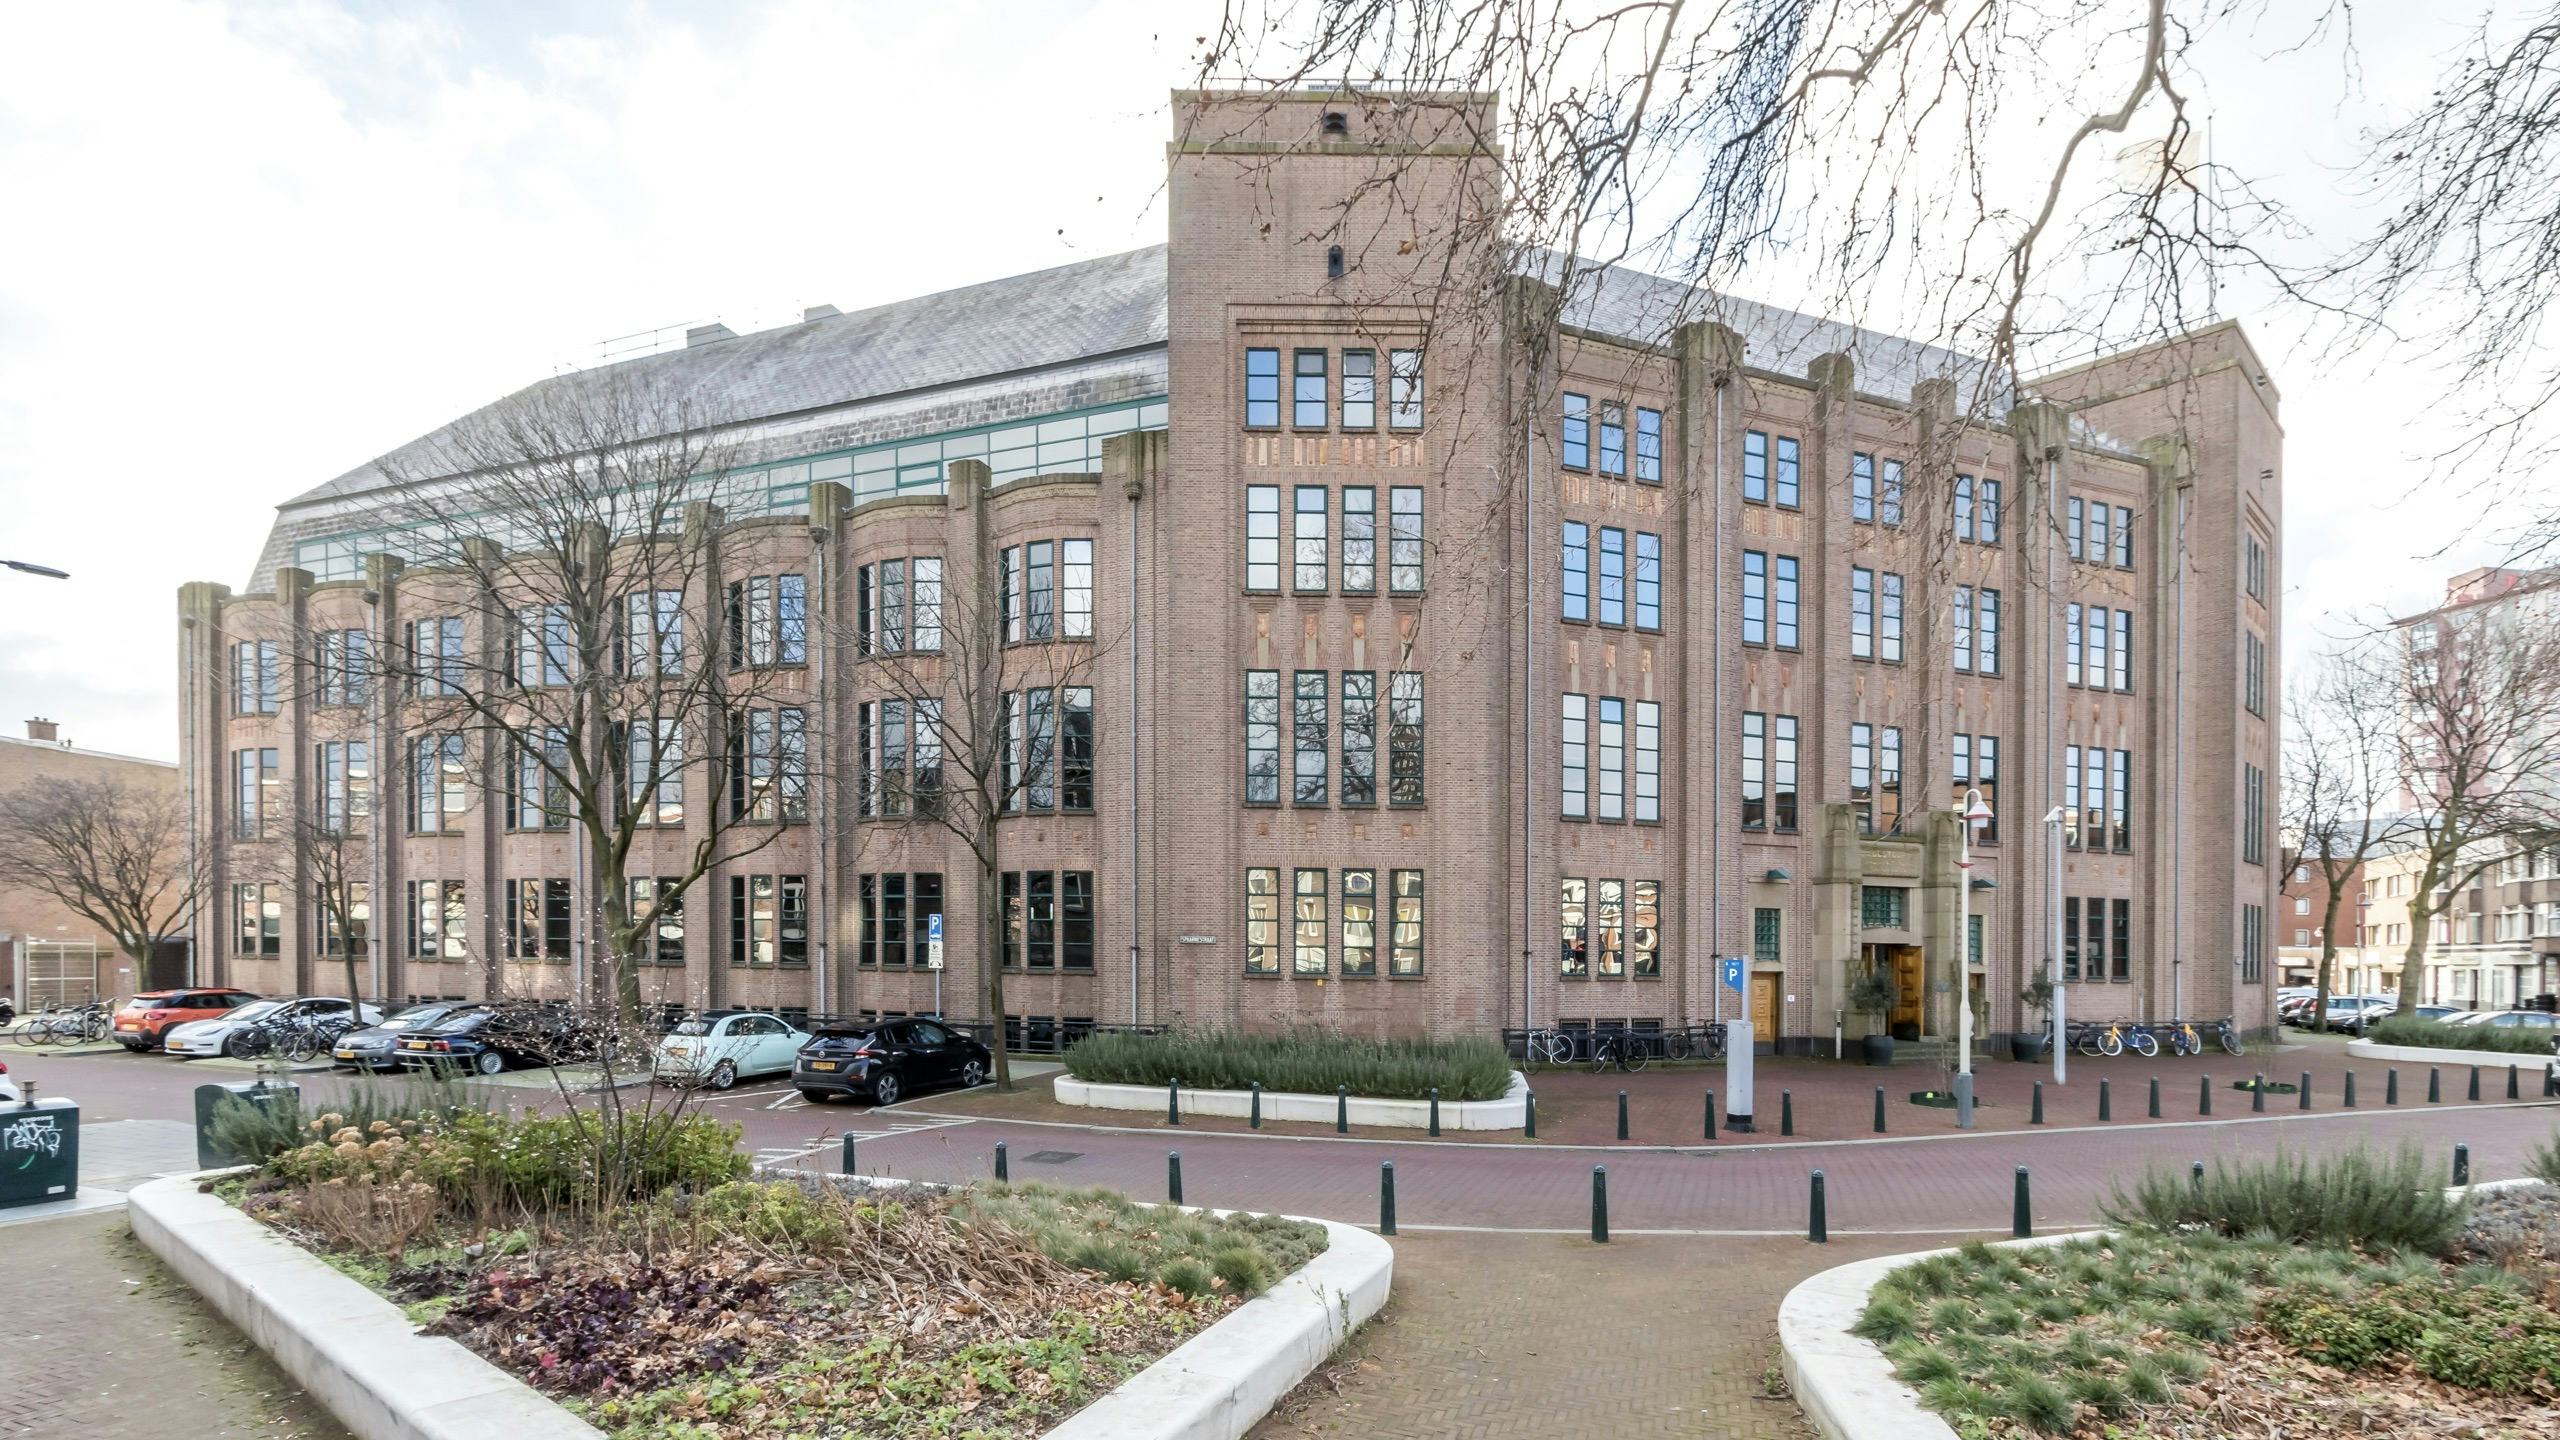 Union Street verhuurt  1.200 m2 kantoorruimte in Den Haag